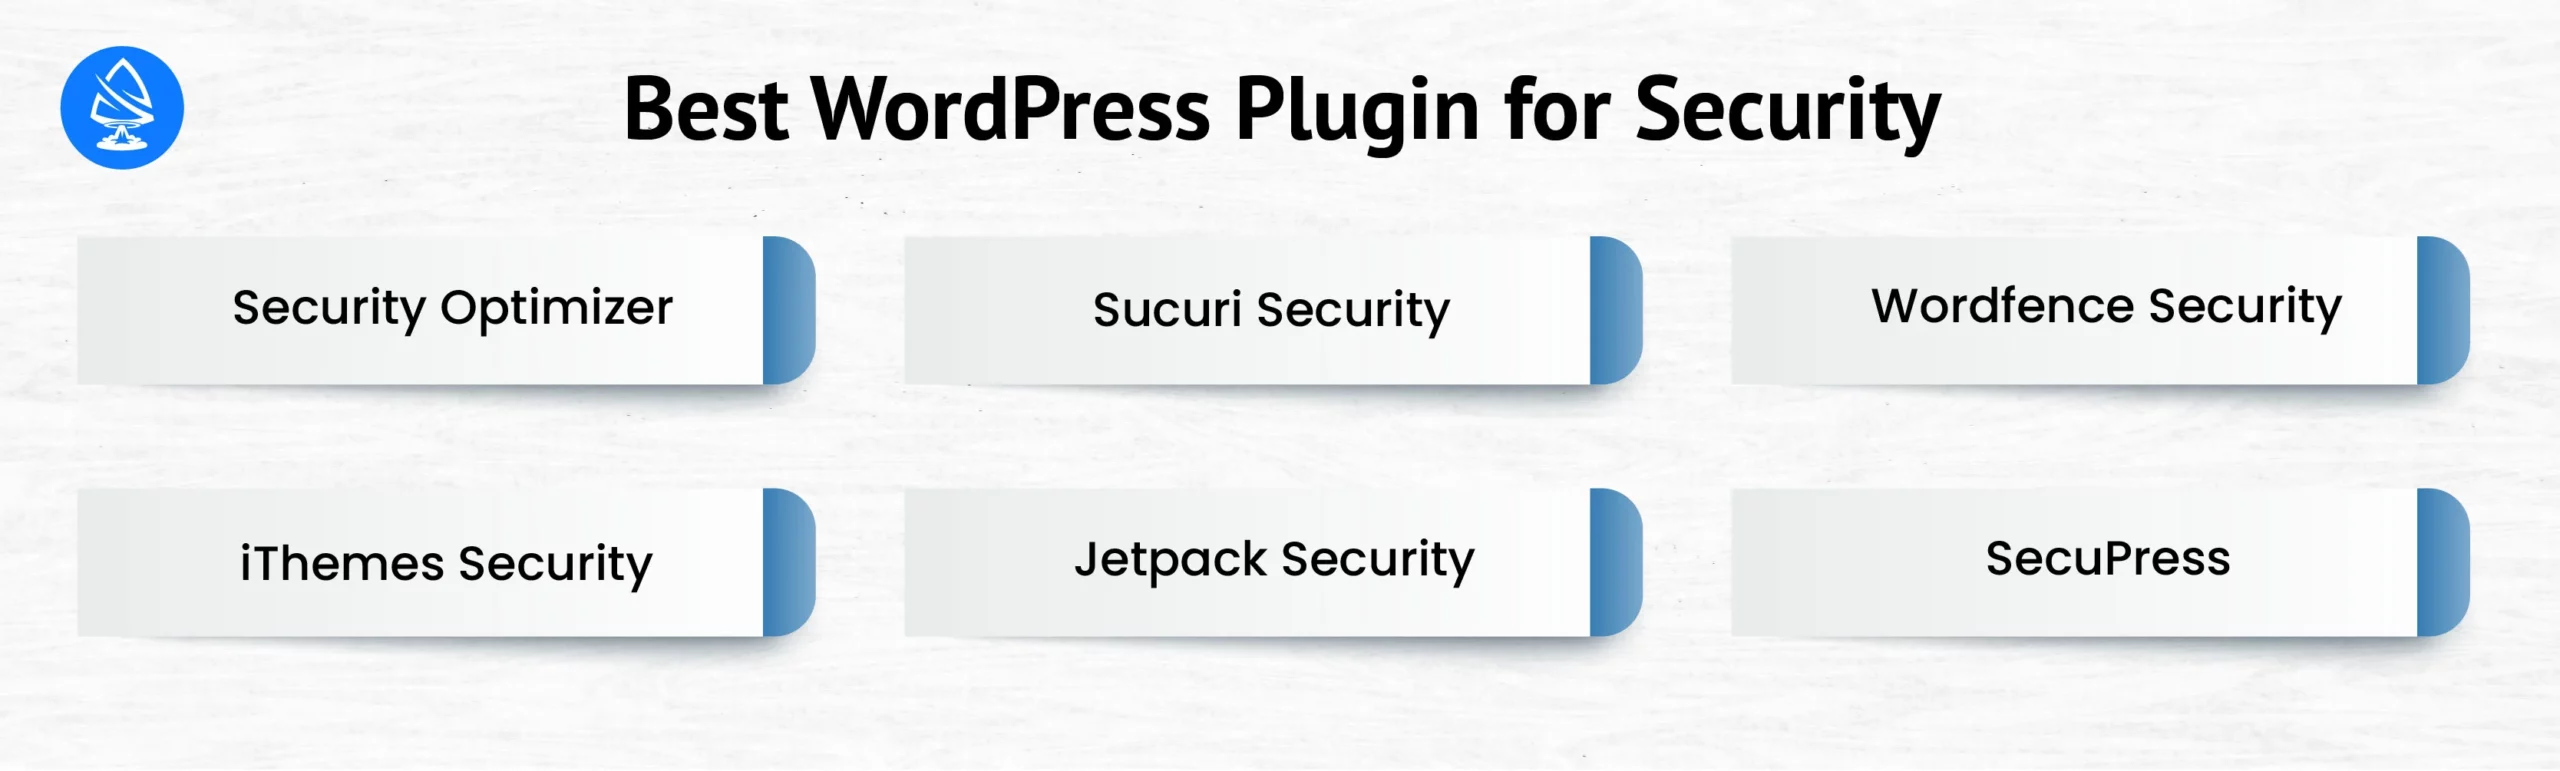 Best WordPress Plugin for Security